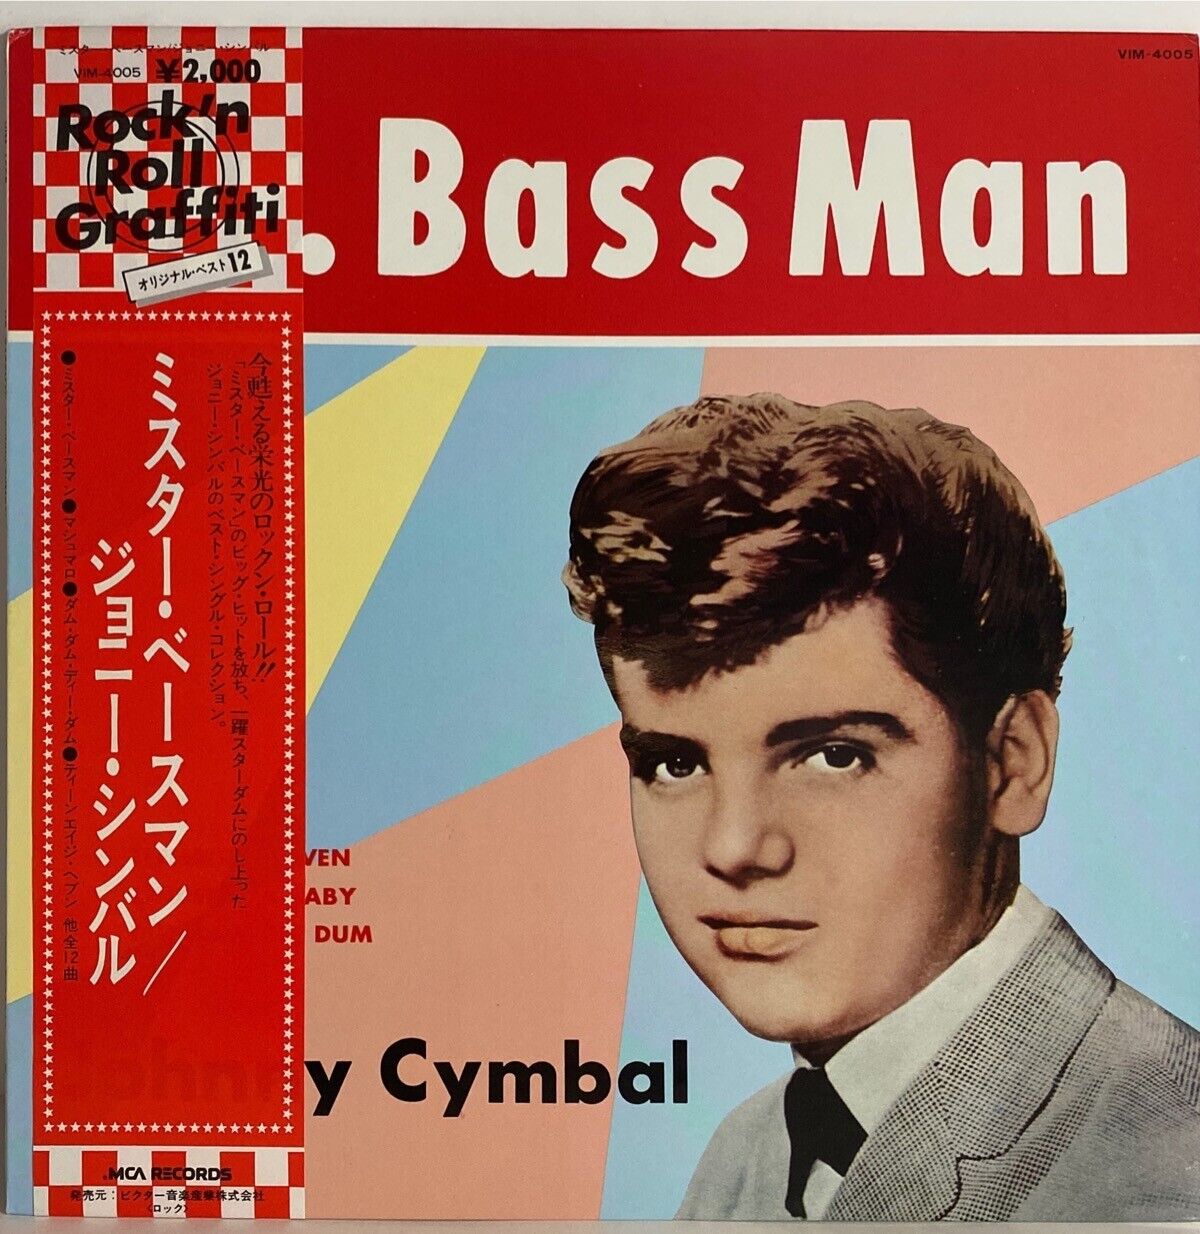 Johnny Cymbal - Mr. Bass Man - Japan Vinyl OBI and Insert - VIM-4005